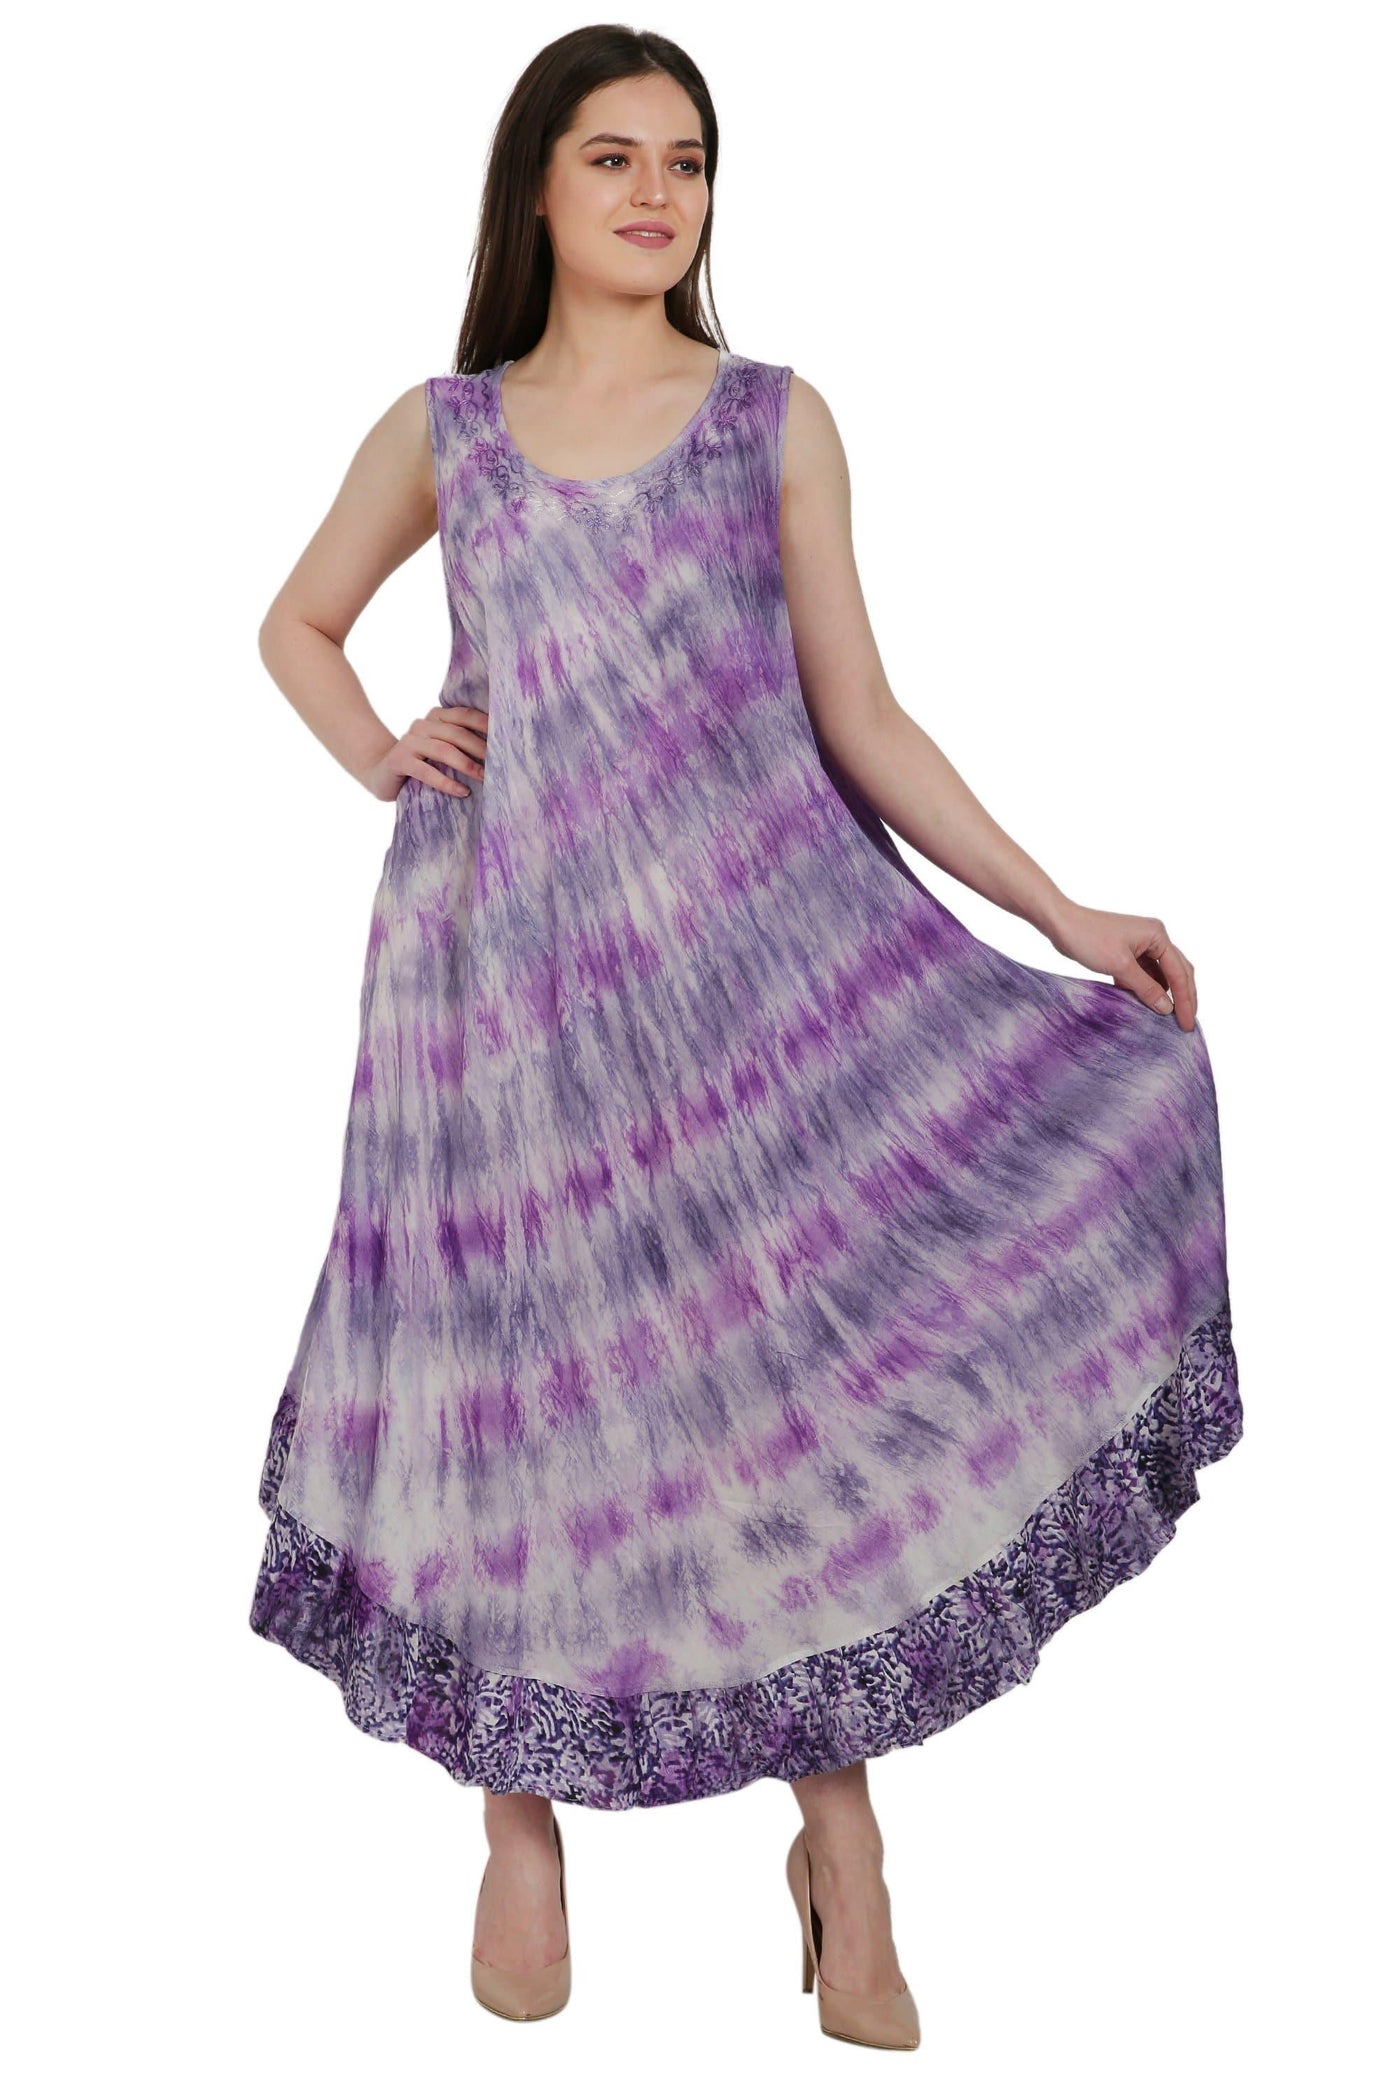 Tie-Dye Beach Dress w/ Printed Hem UD48-2312  - Advance Apparels Inc